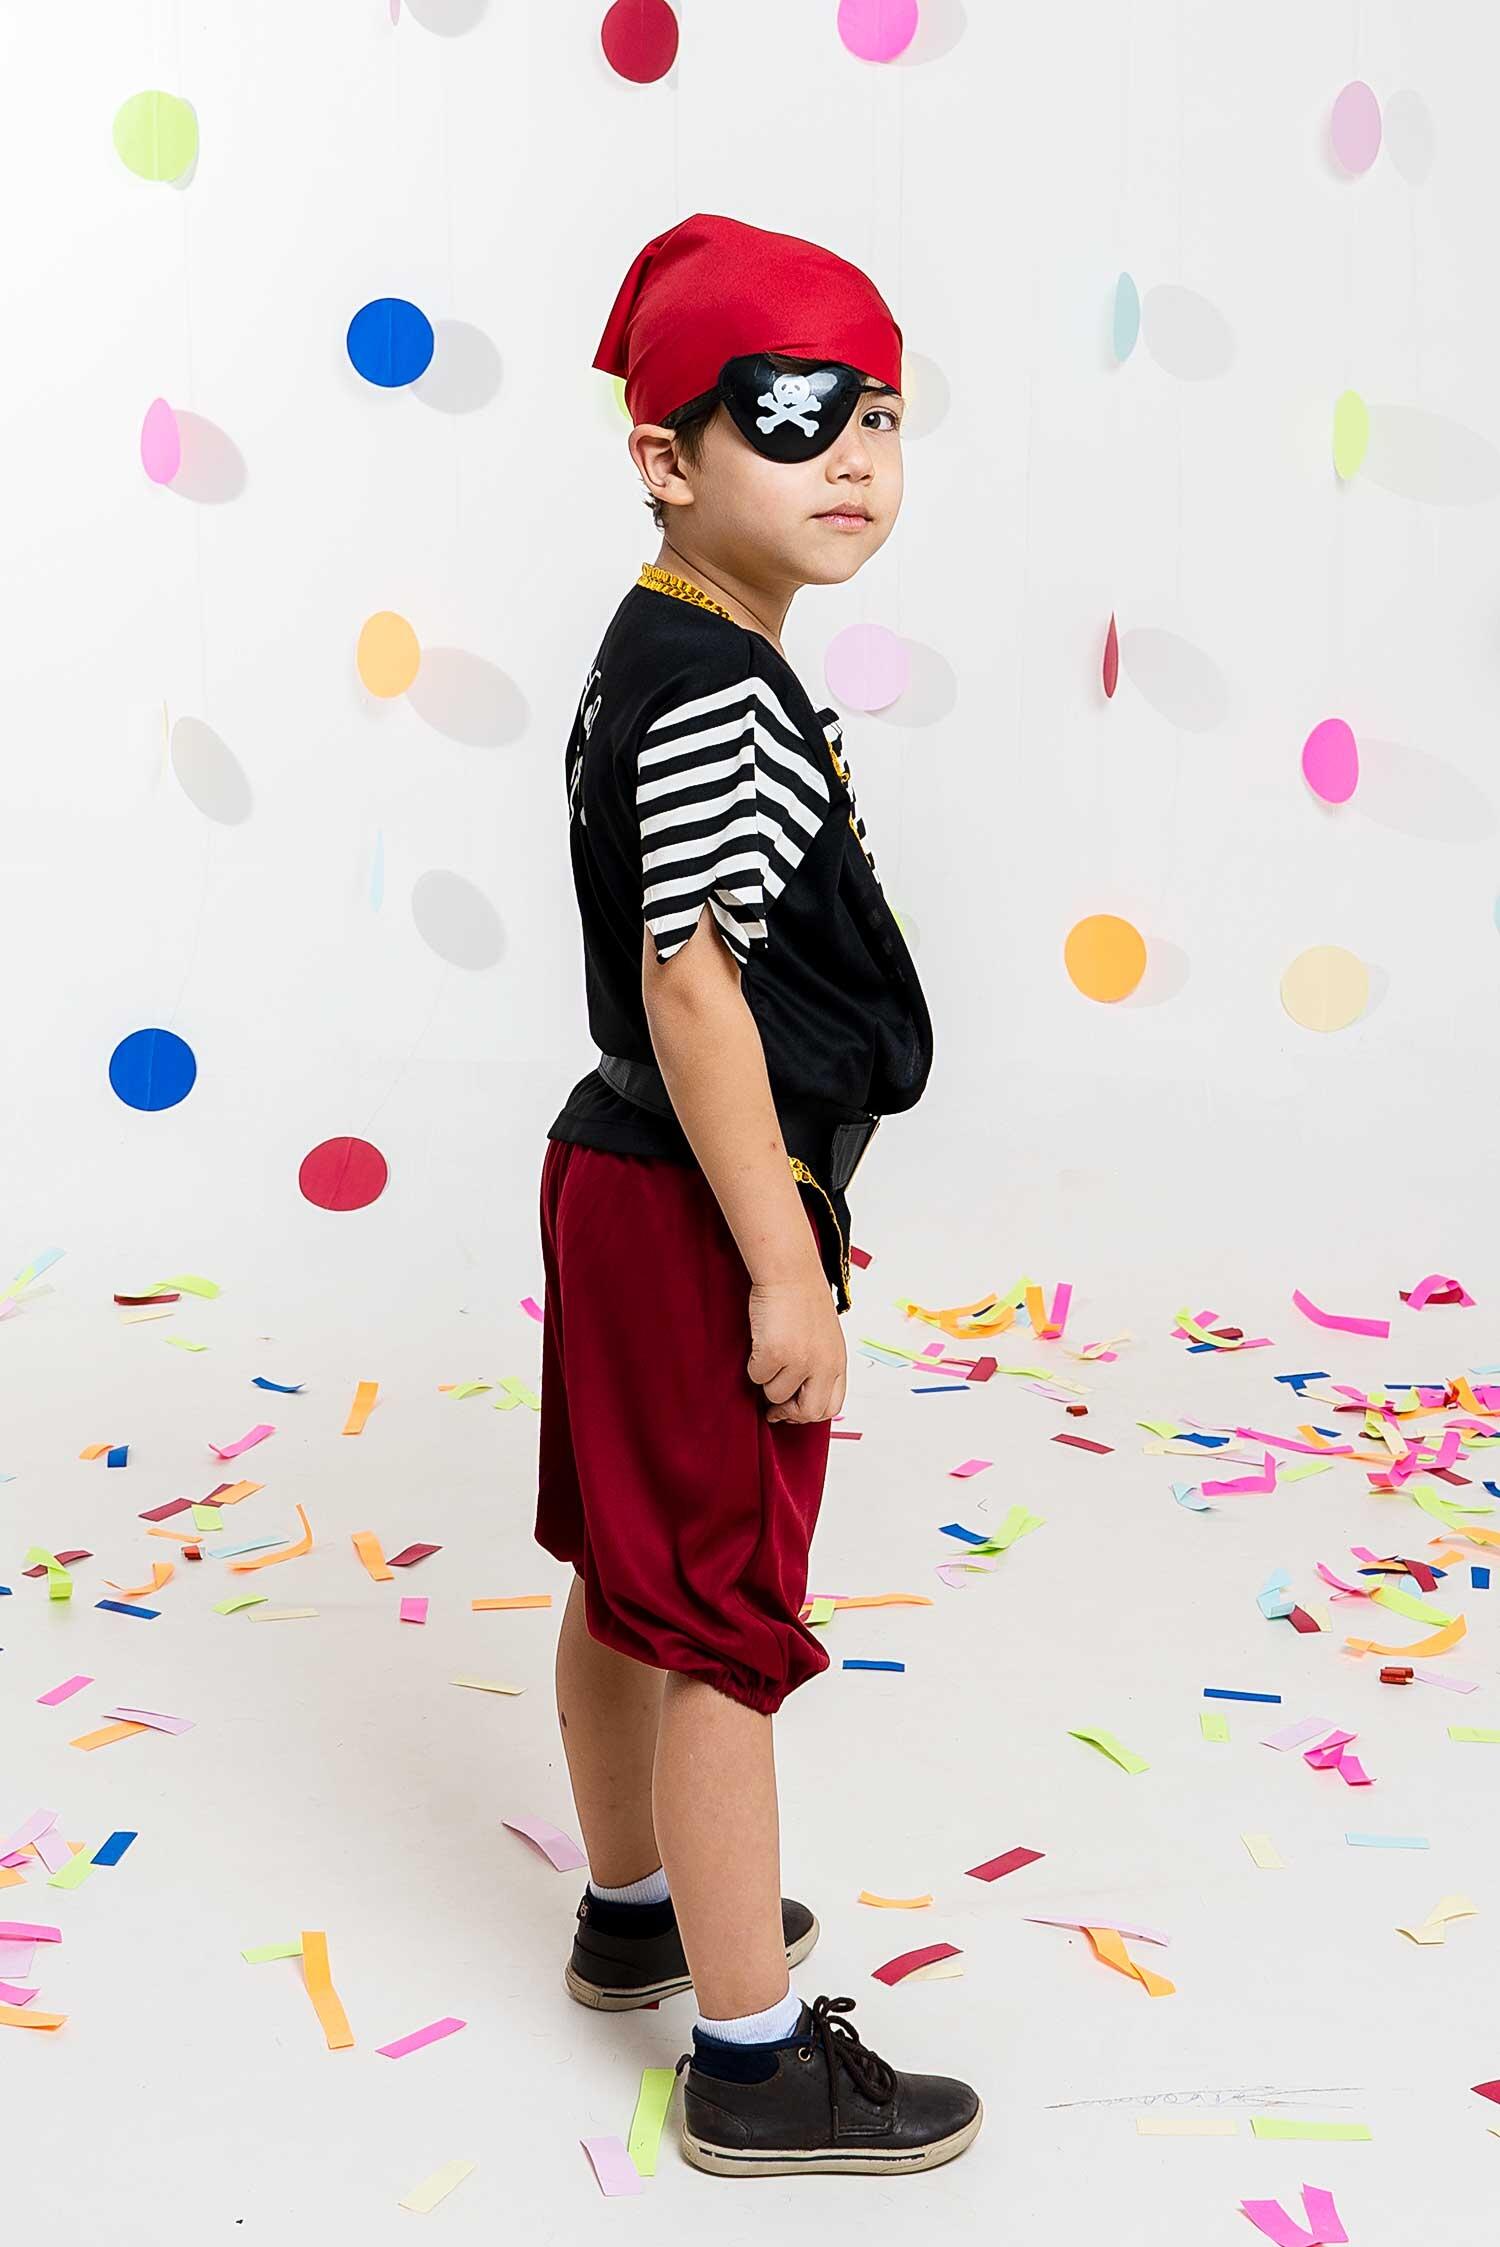 Fantasia Pirata Infantil Masculino Tapa Olho Camiseta Shorts